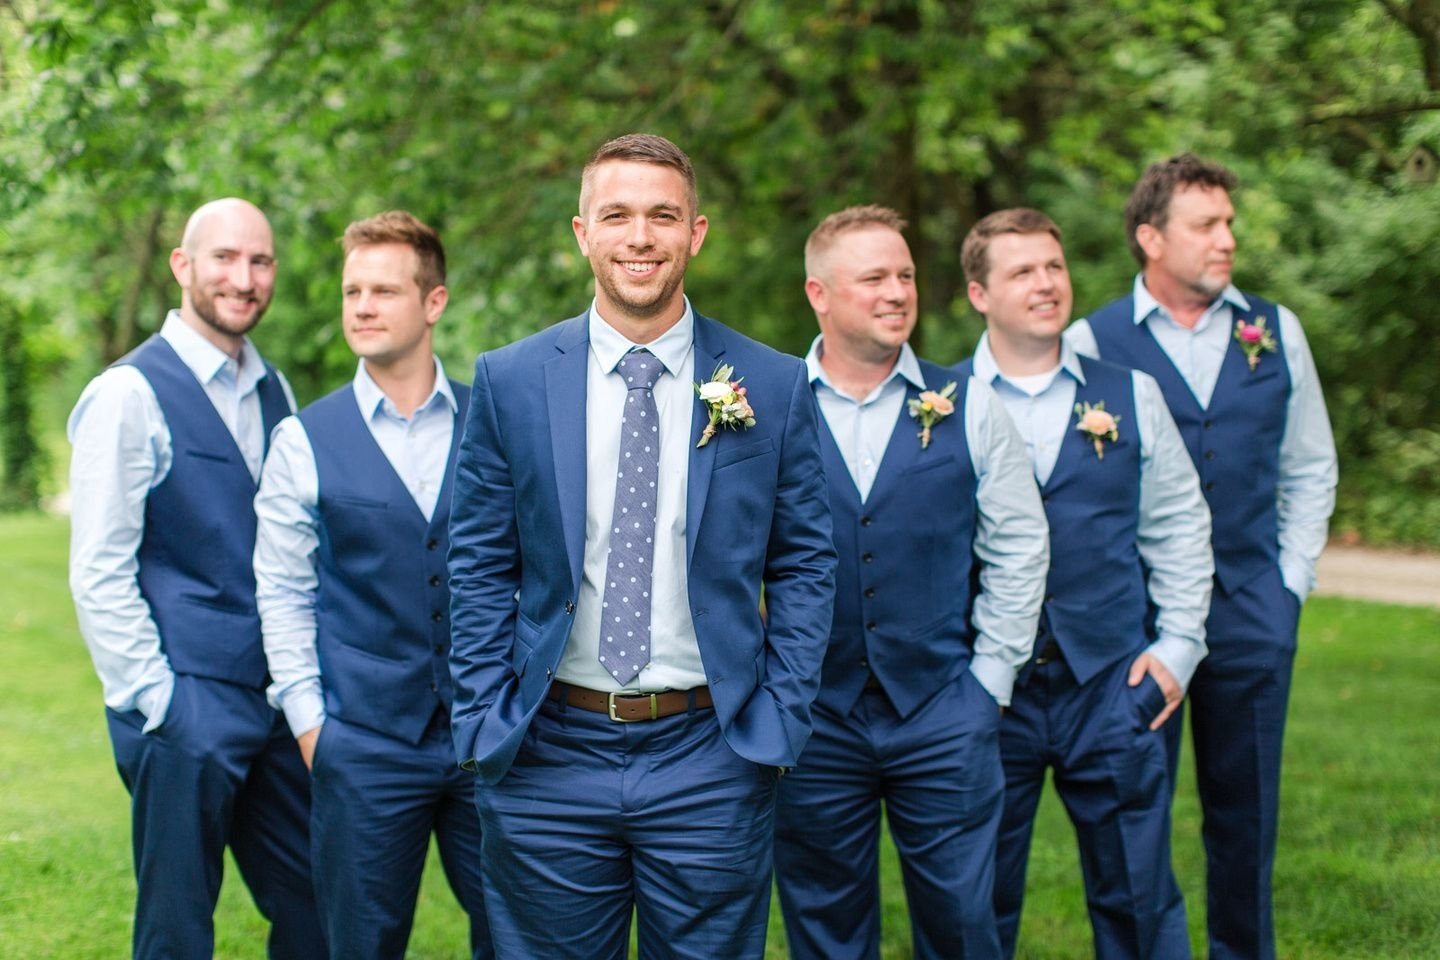 10 Fashionable Groom And Groomsmen Attire Ideas cool groomsmen attire ideas wedding weddings and wedding suits 2022